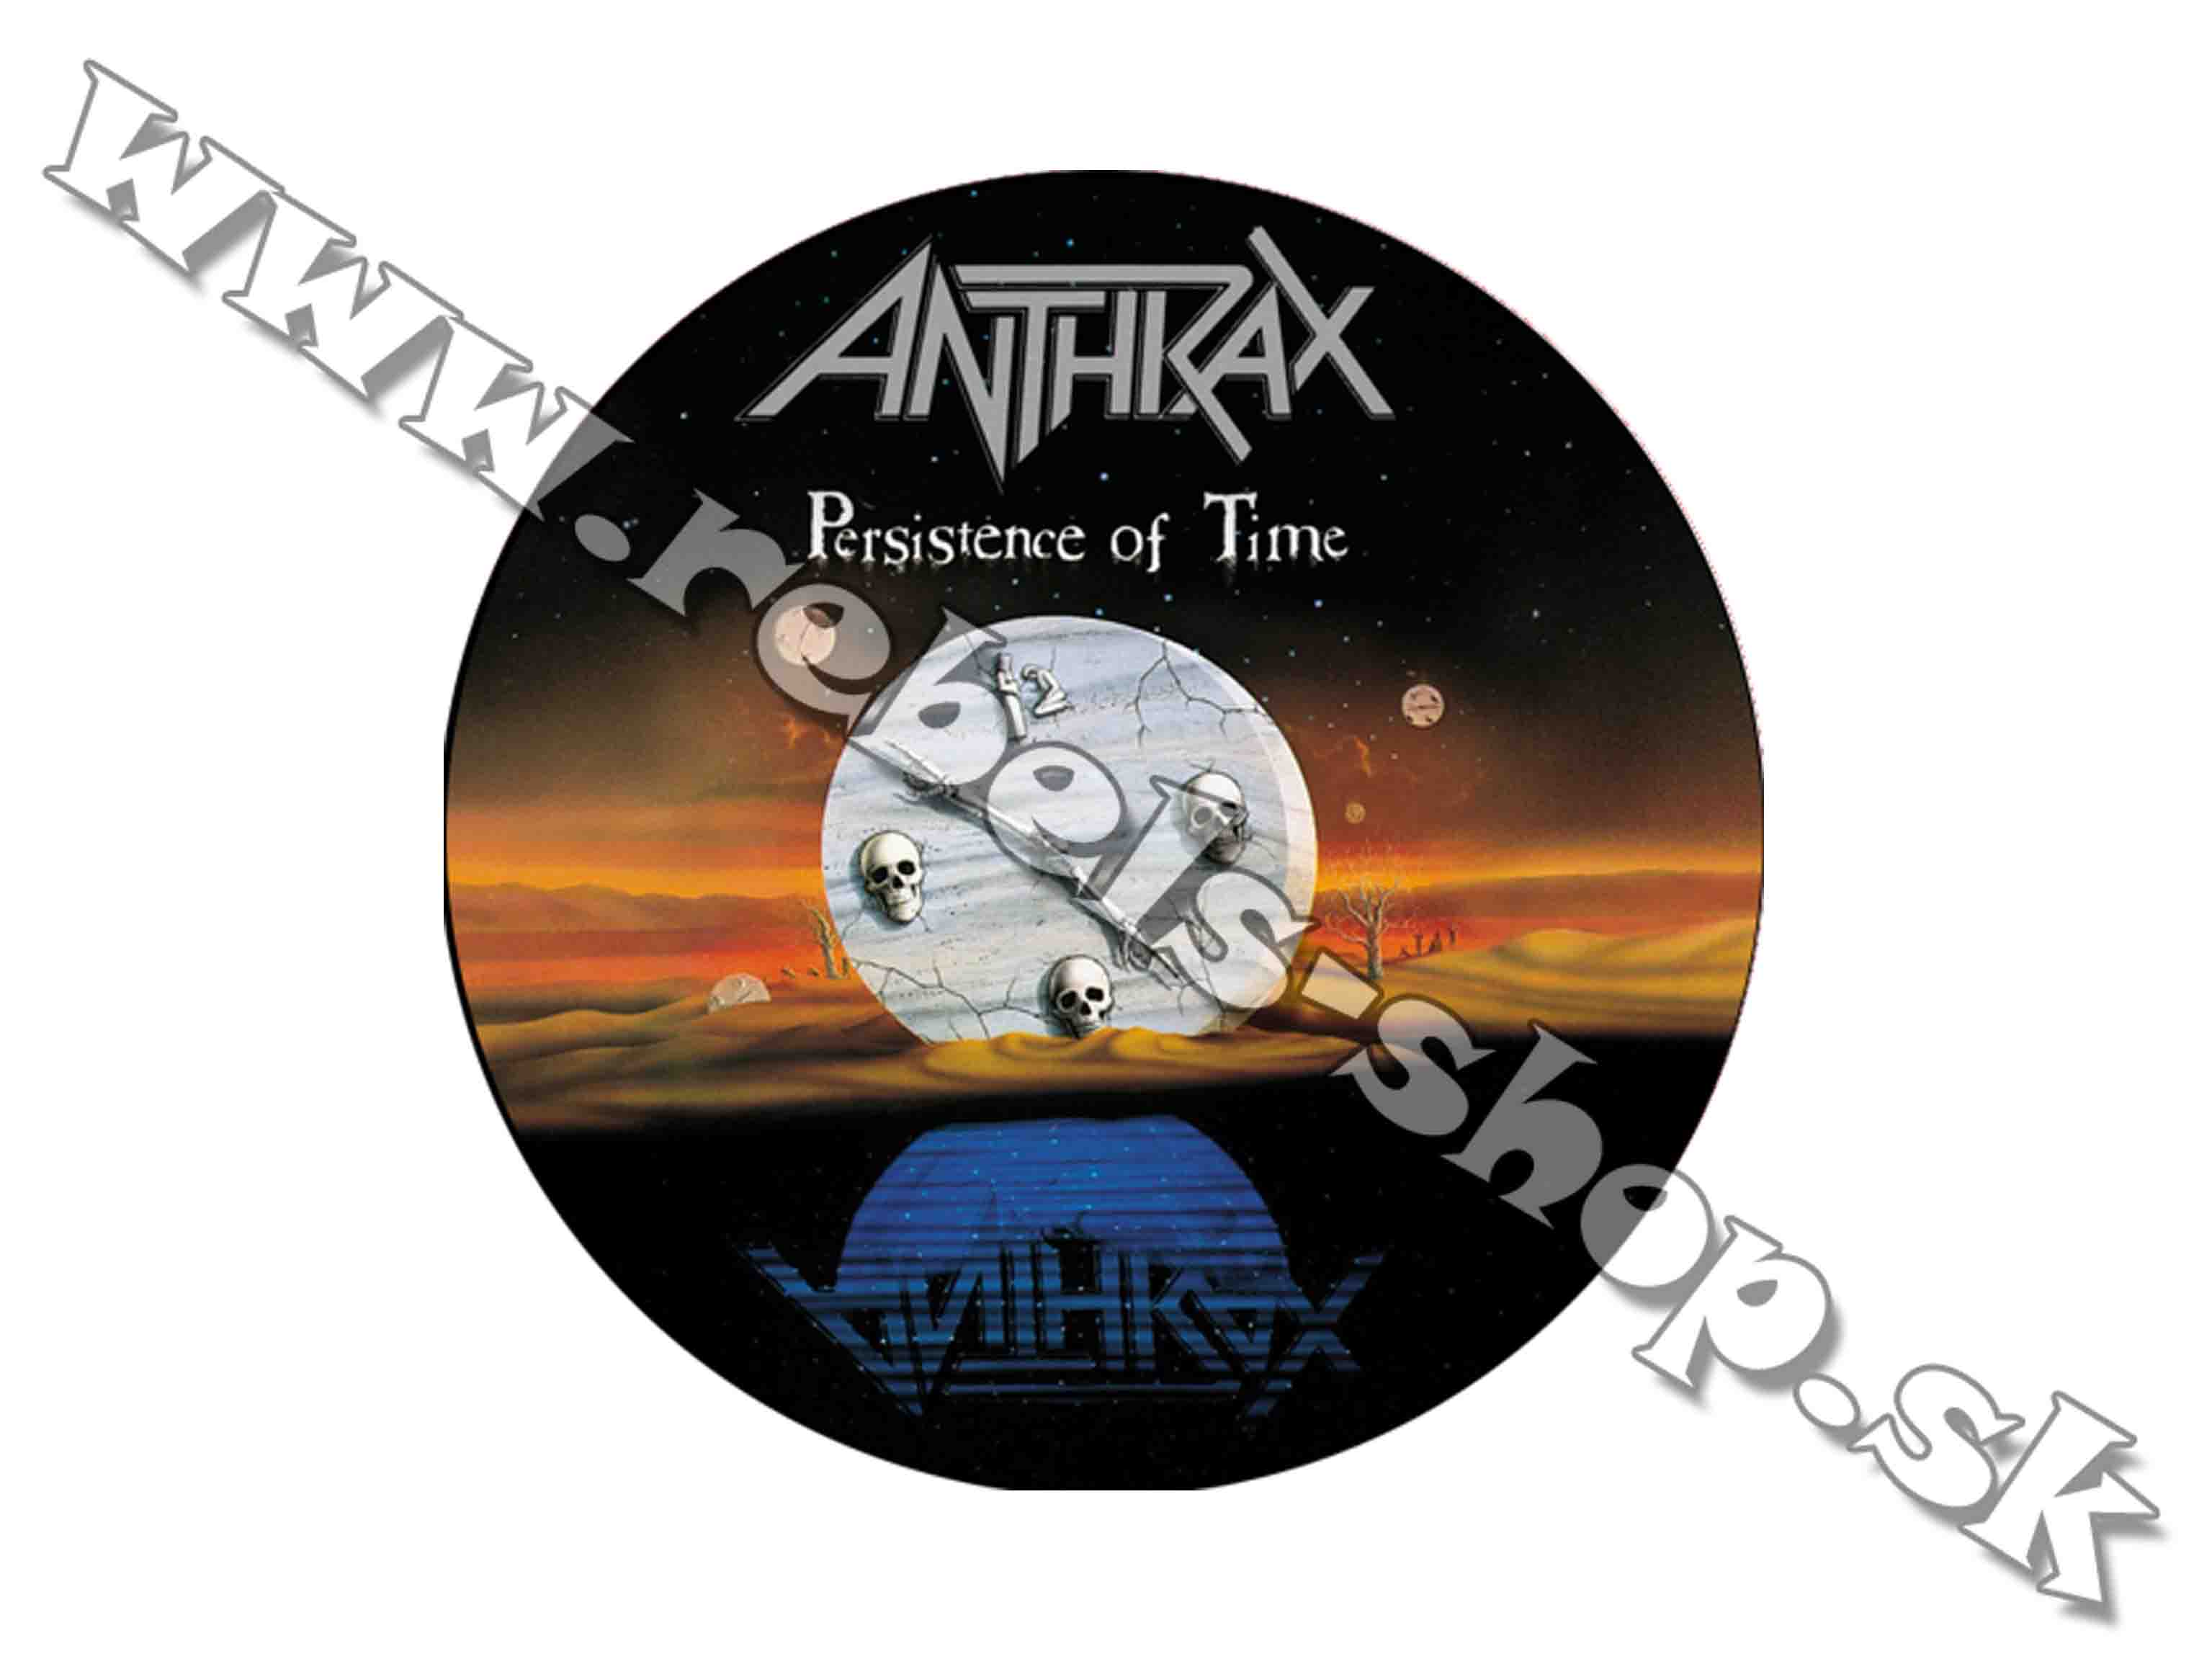 Odznak "Anthrax"